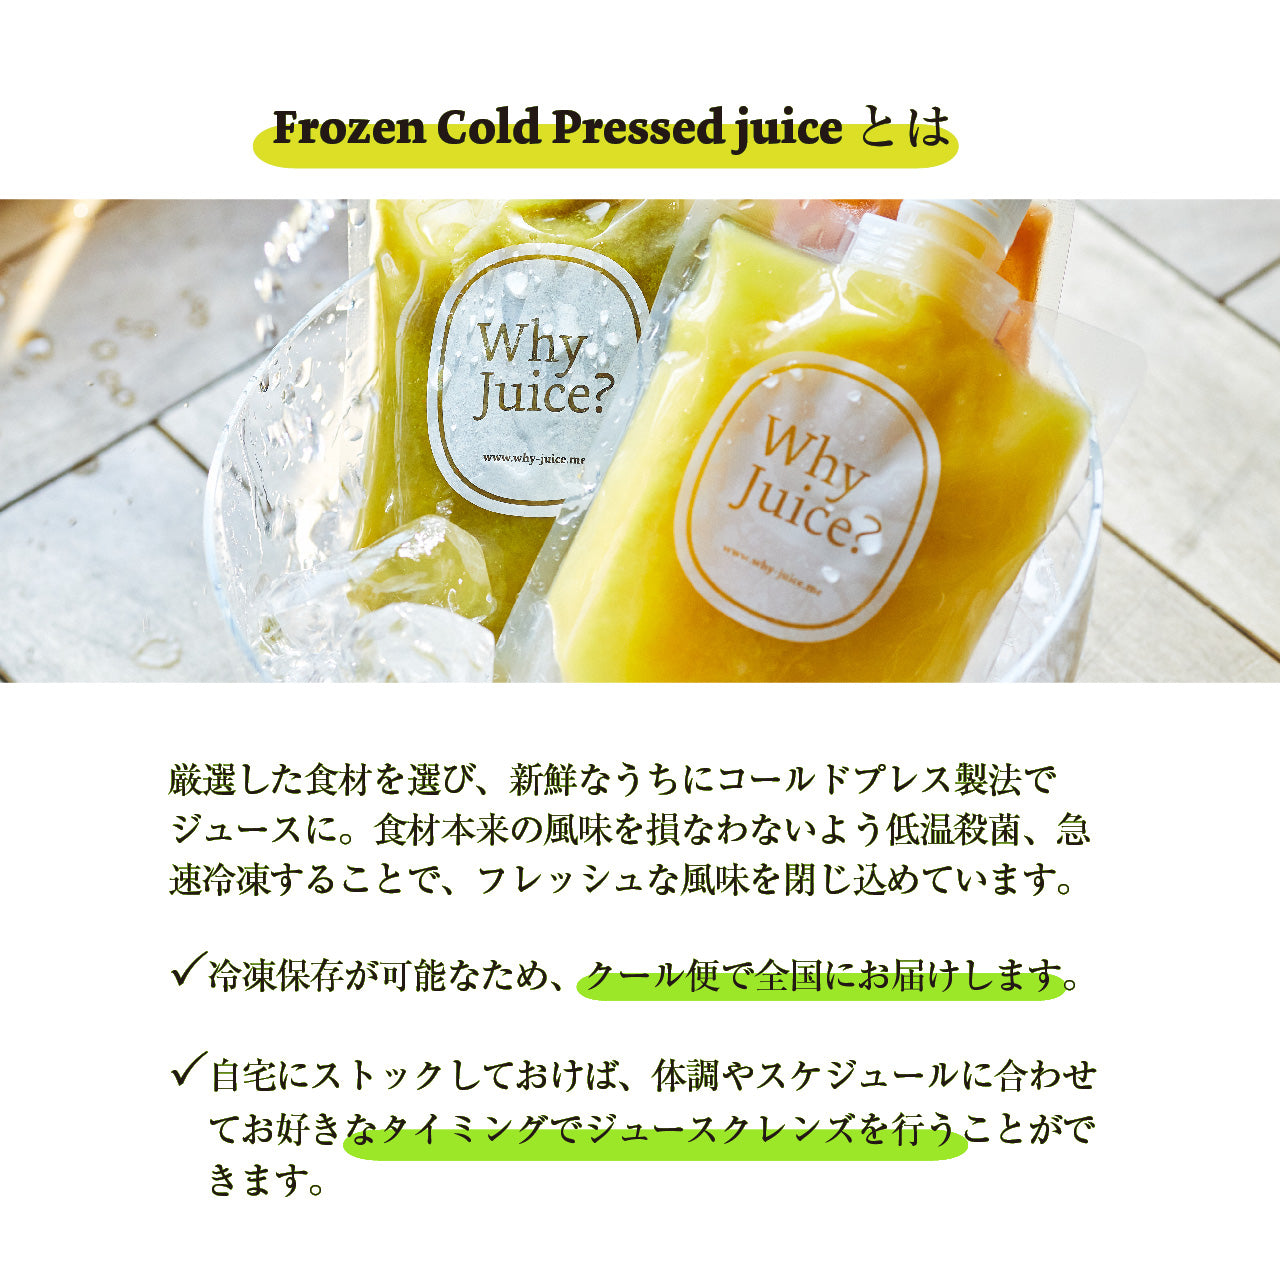 Frozen Detox Juice Program 【Half-day "SUNRISE"】3本セット